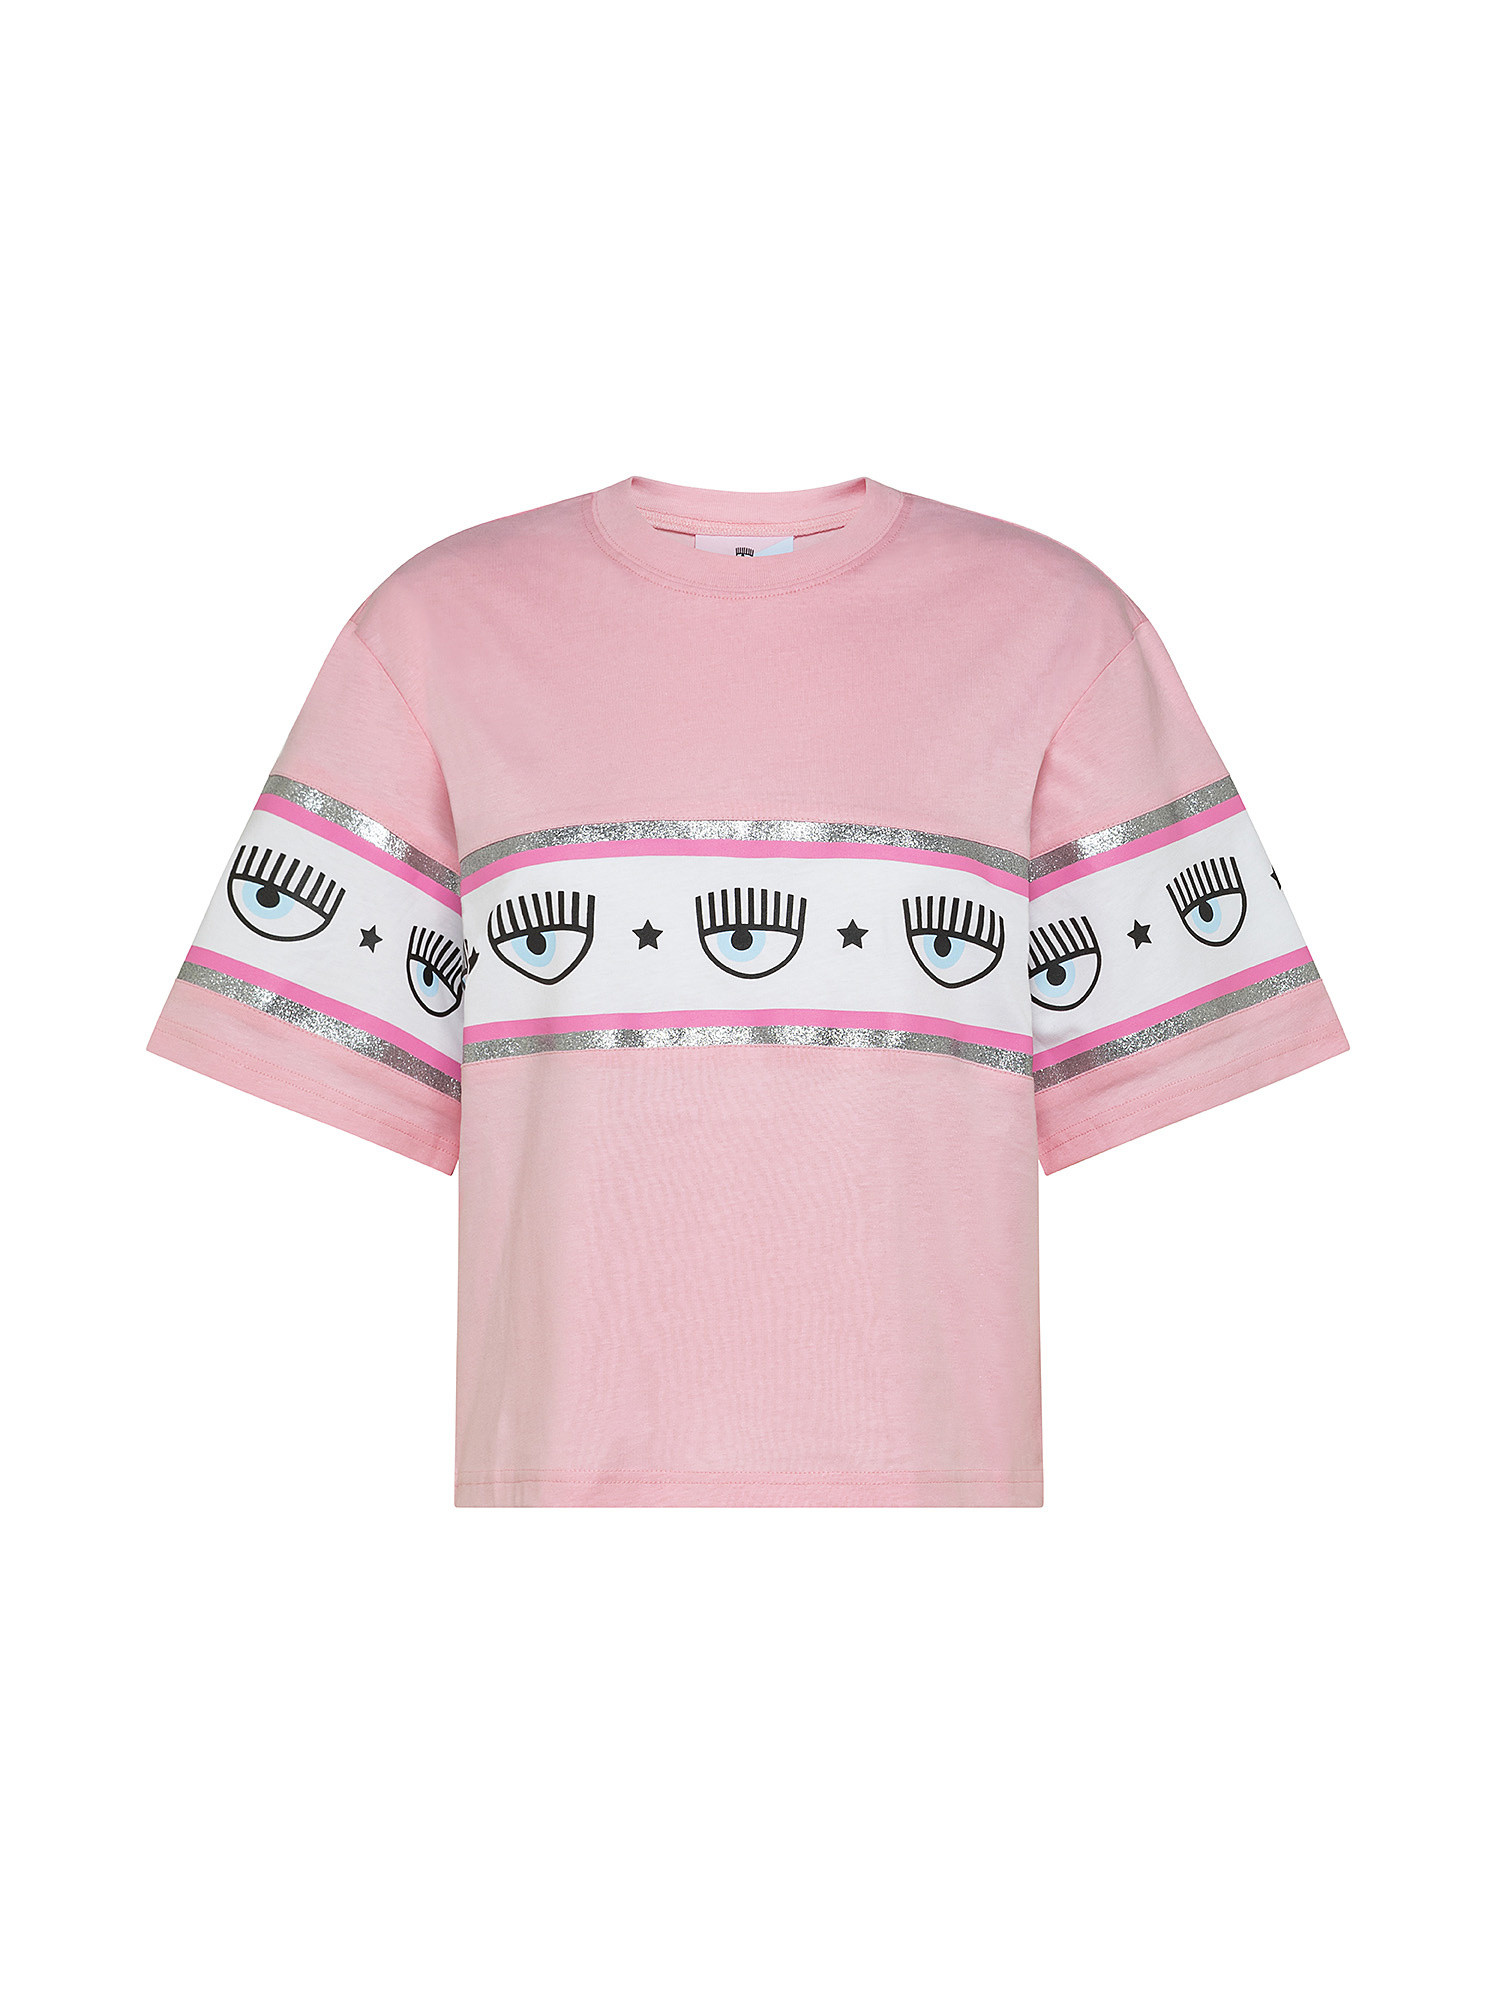 Logomania t-shirt, Pink, large image number 0